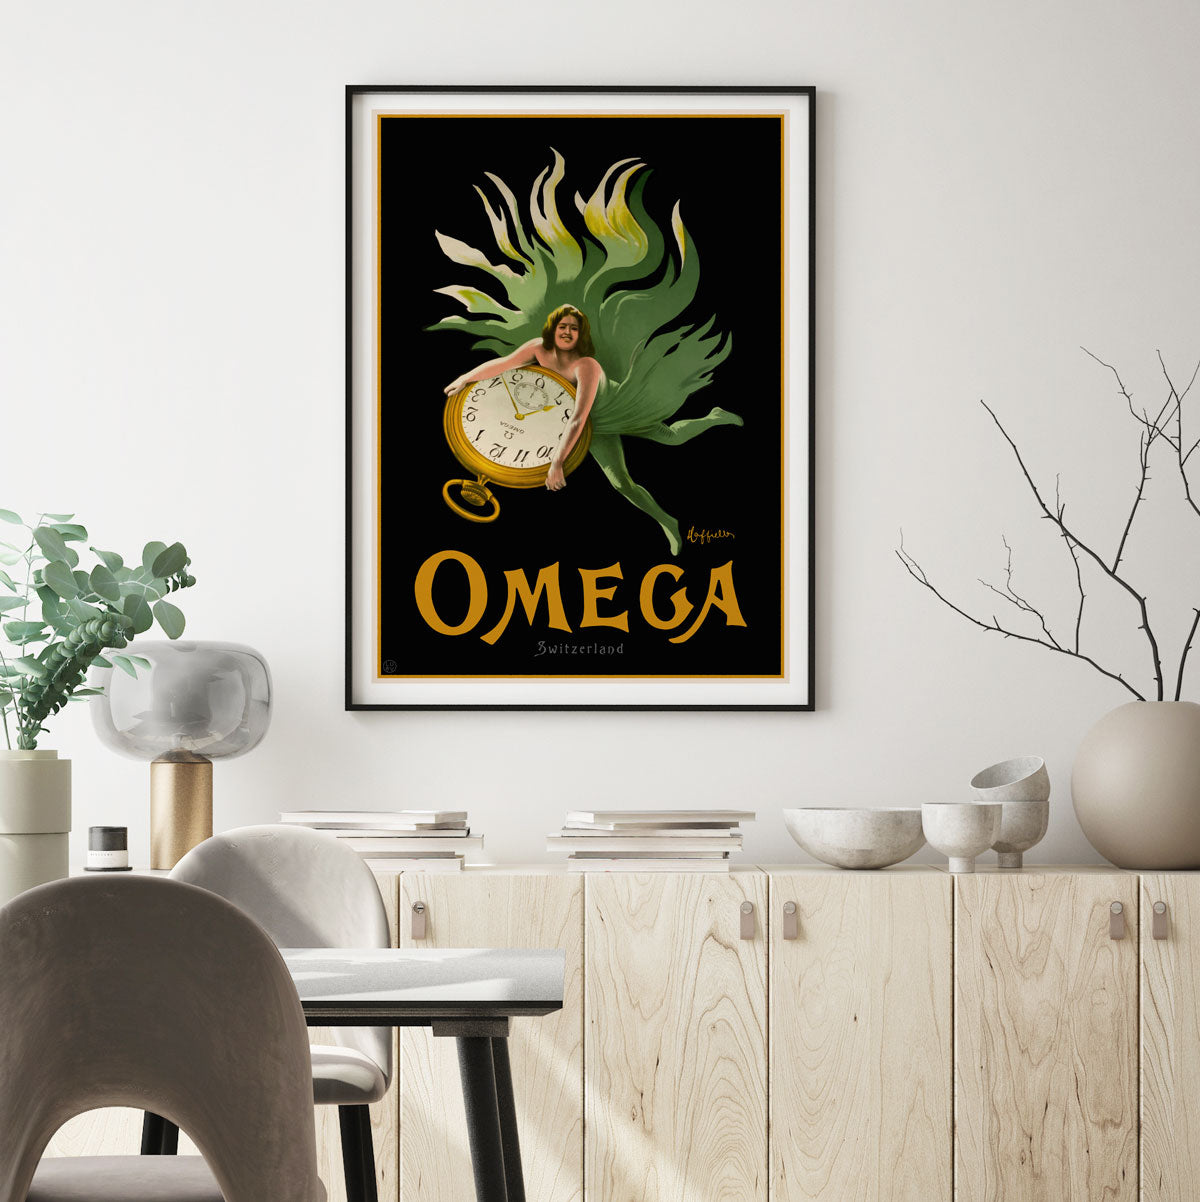 Omega Switzerland retro vintage advertising print - Places We Luv